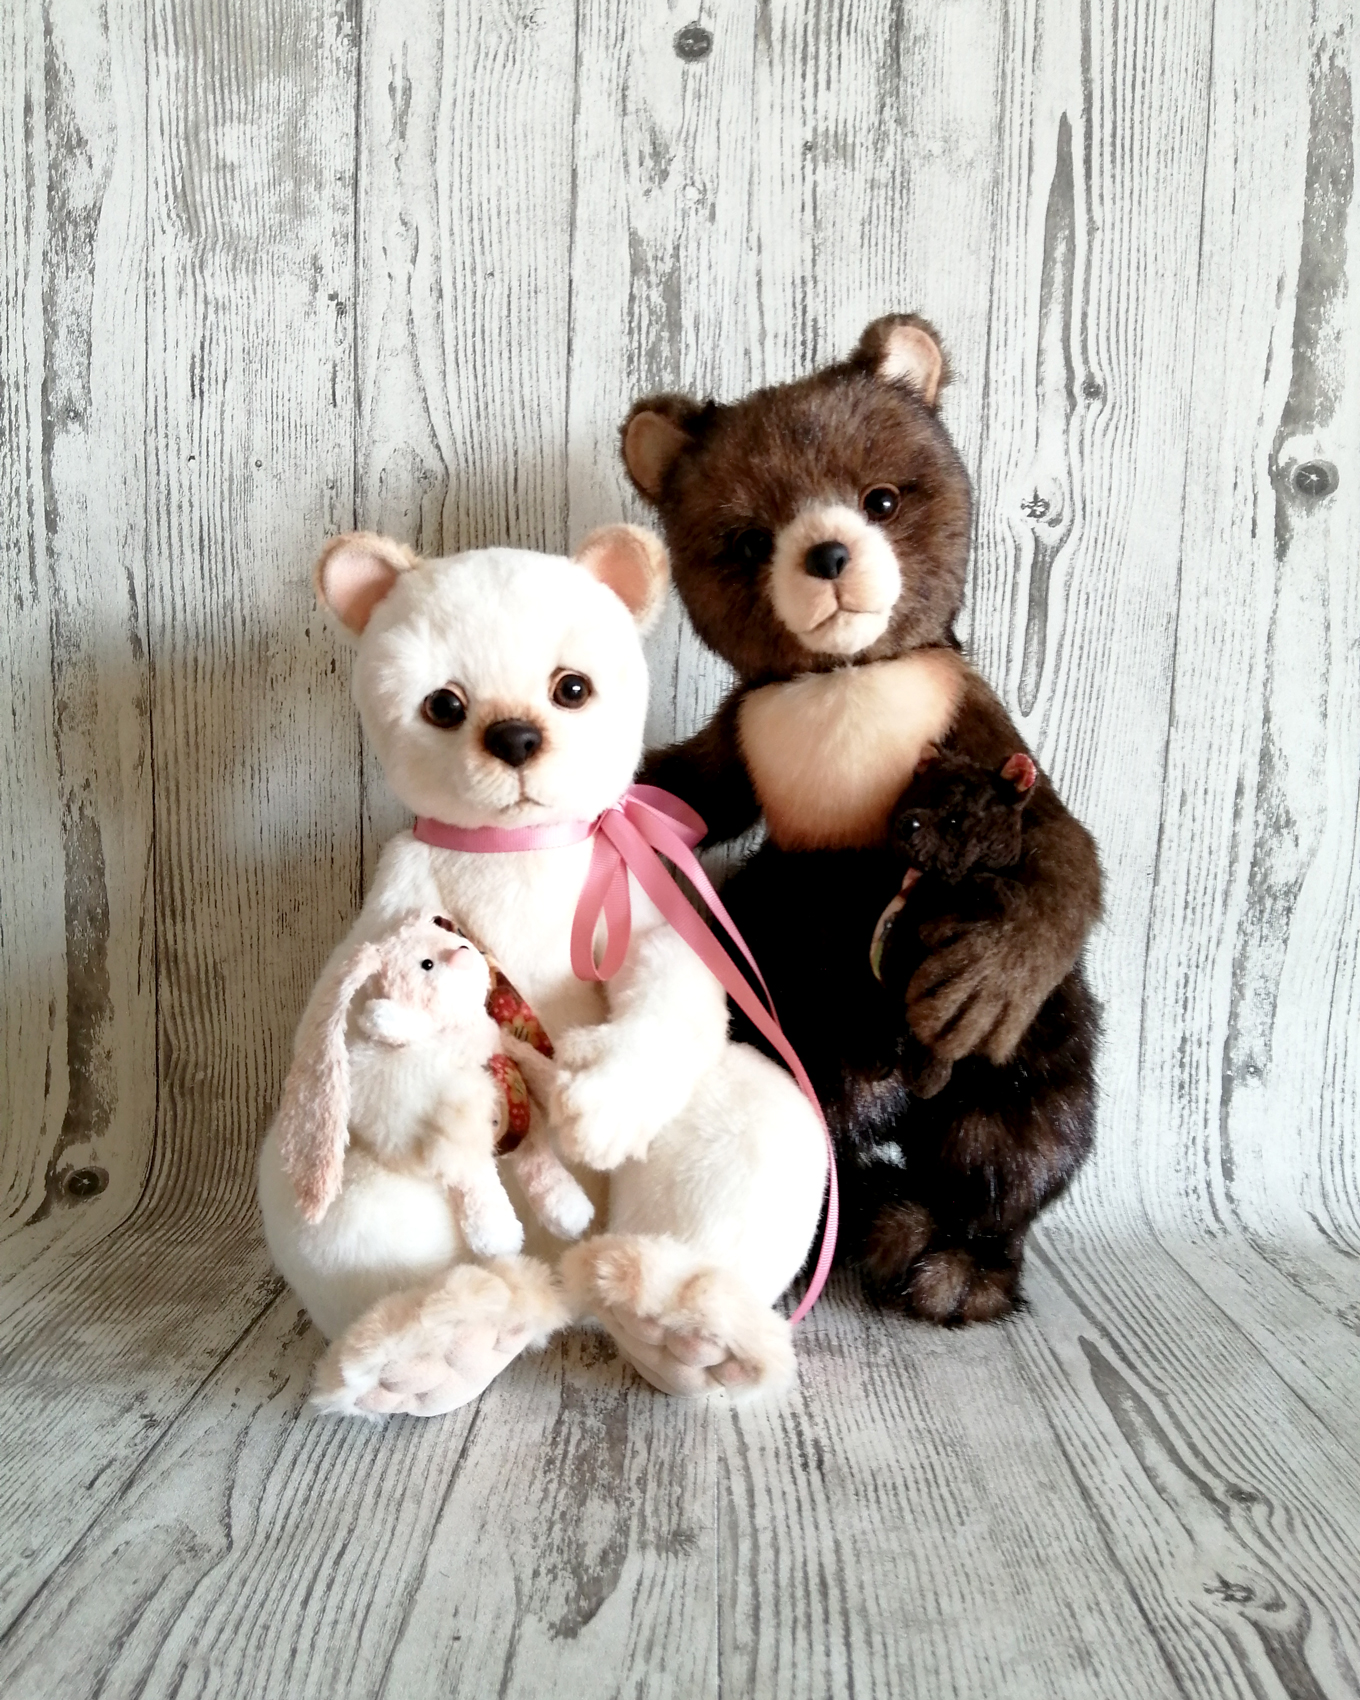 Collectible teddy bears